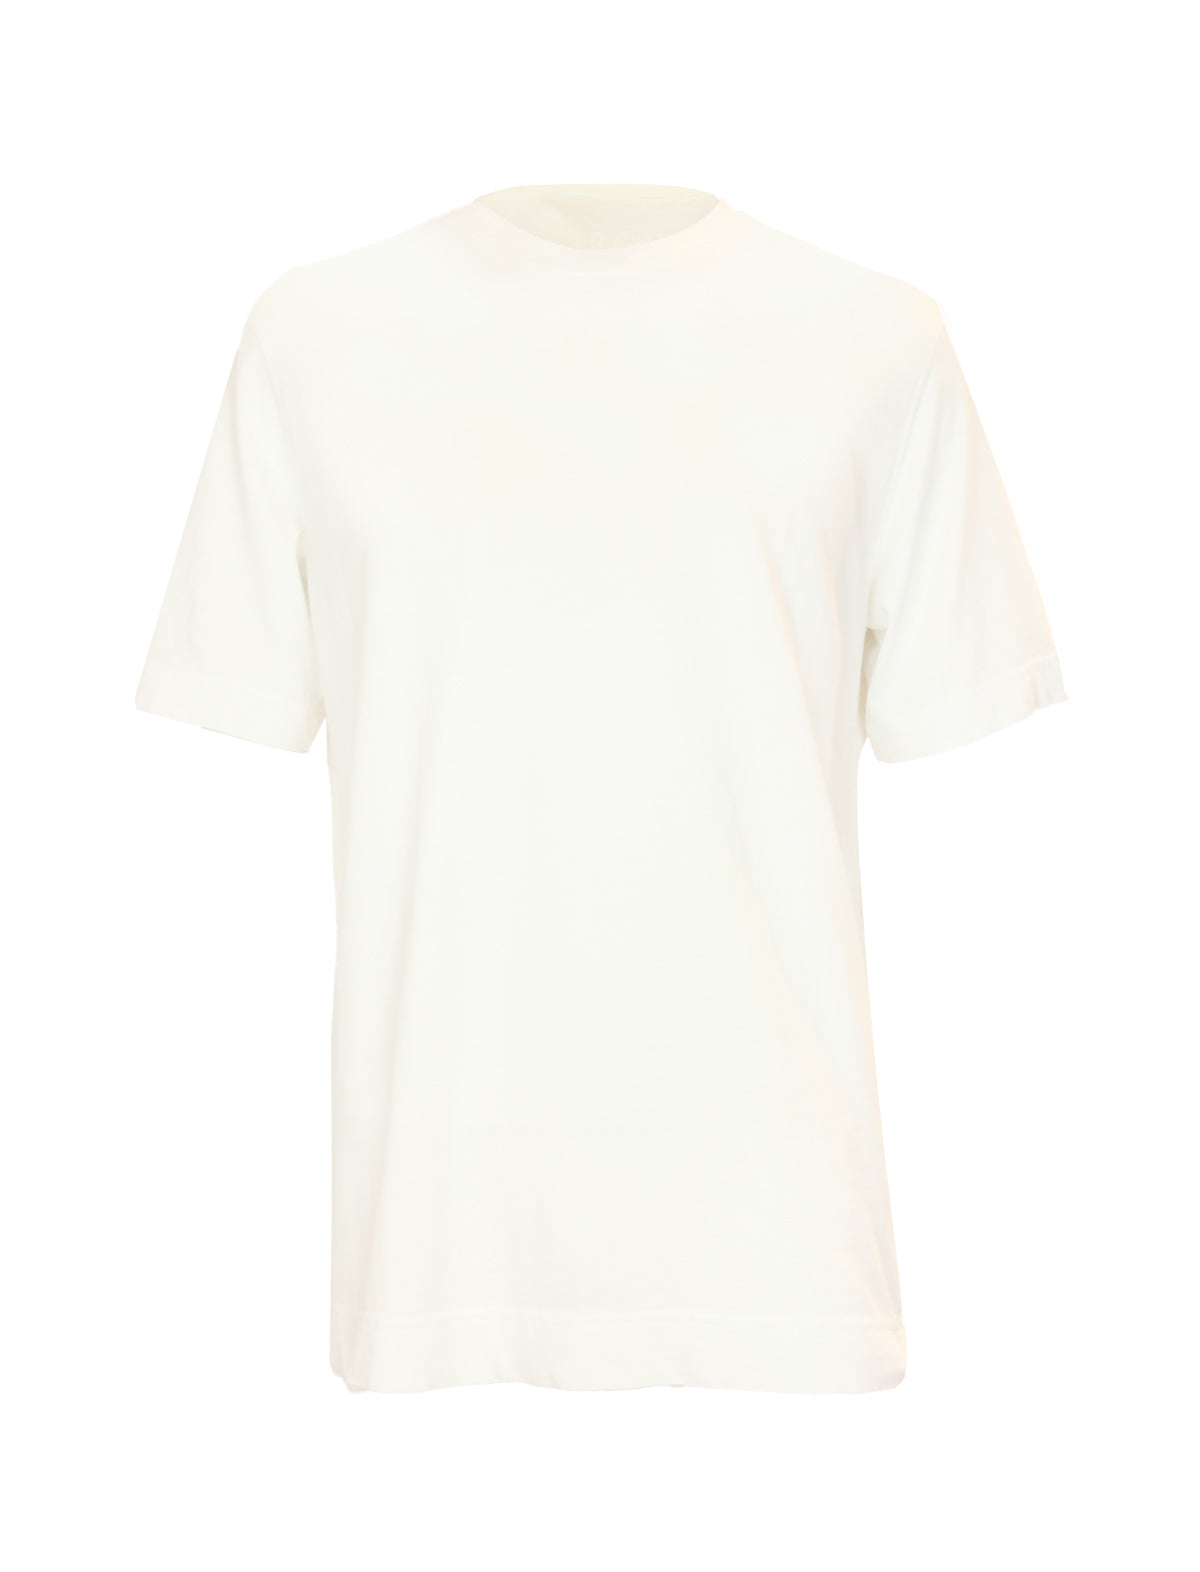 CIRCOLO 1901 Jersey T-Shirt in White